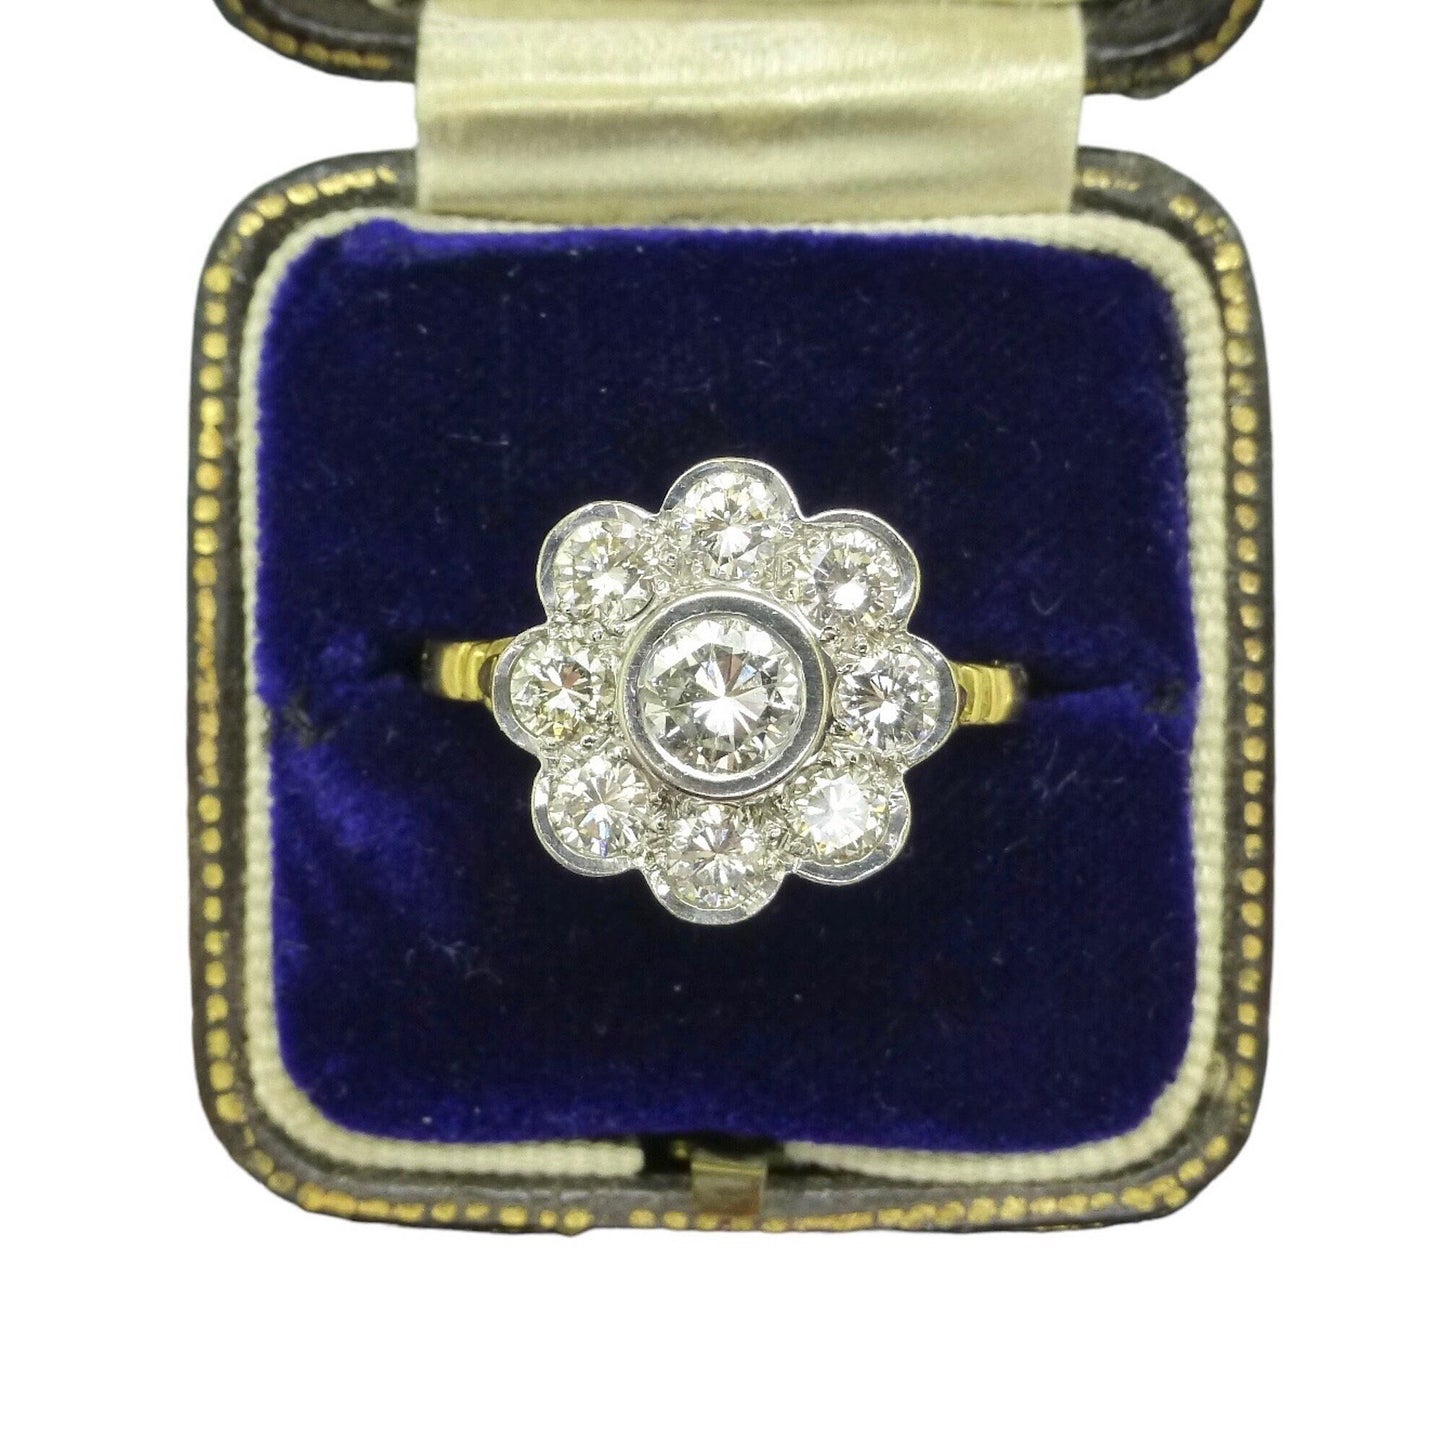 Vintage 18ct gold diamond cluster engagement ring 1.23 carat ~ Independent Valuation